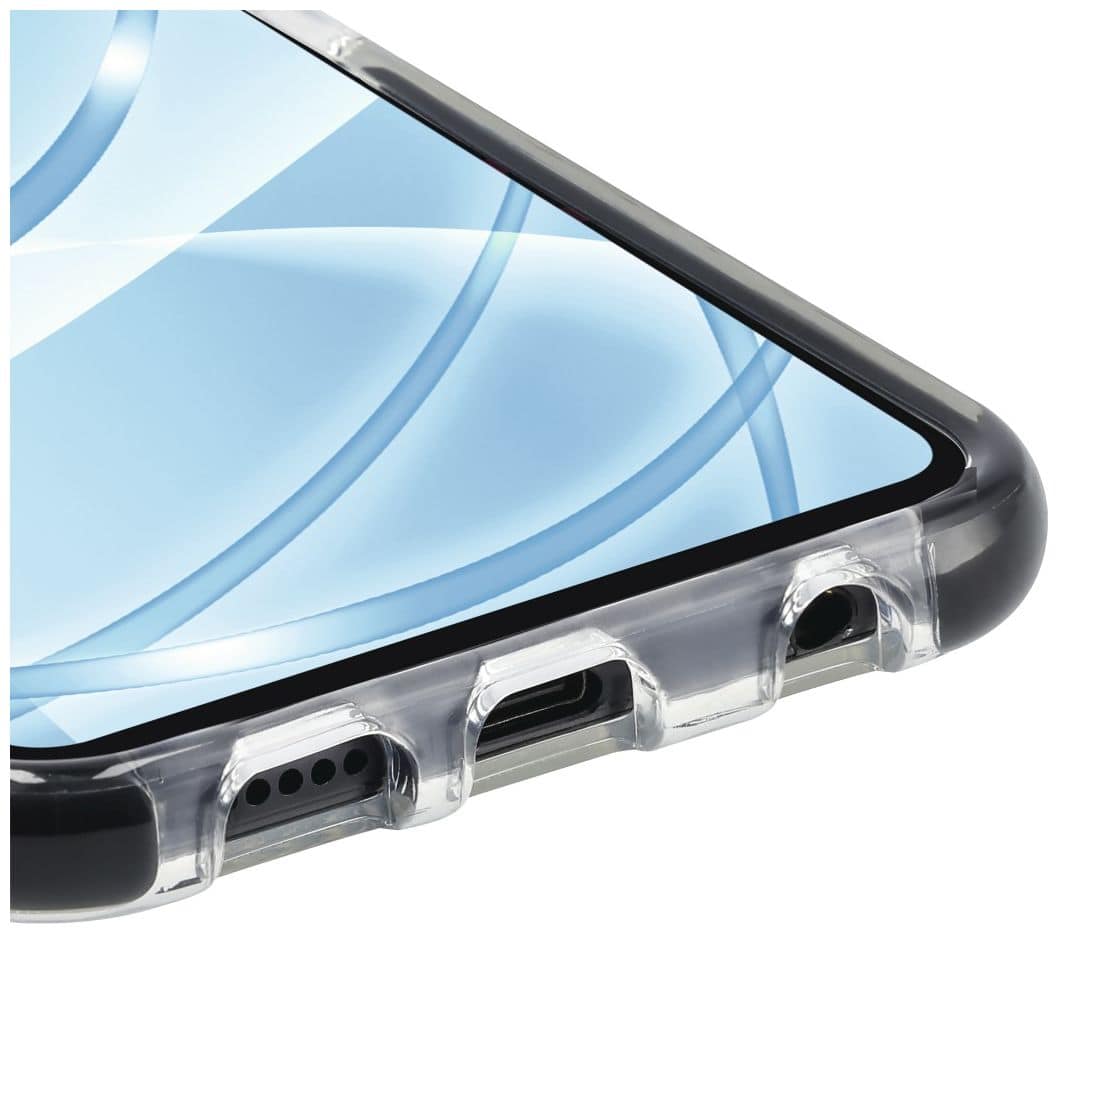 196726 Protector Cover für Samsung Galaxy A72 (Transparent) 